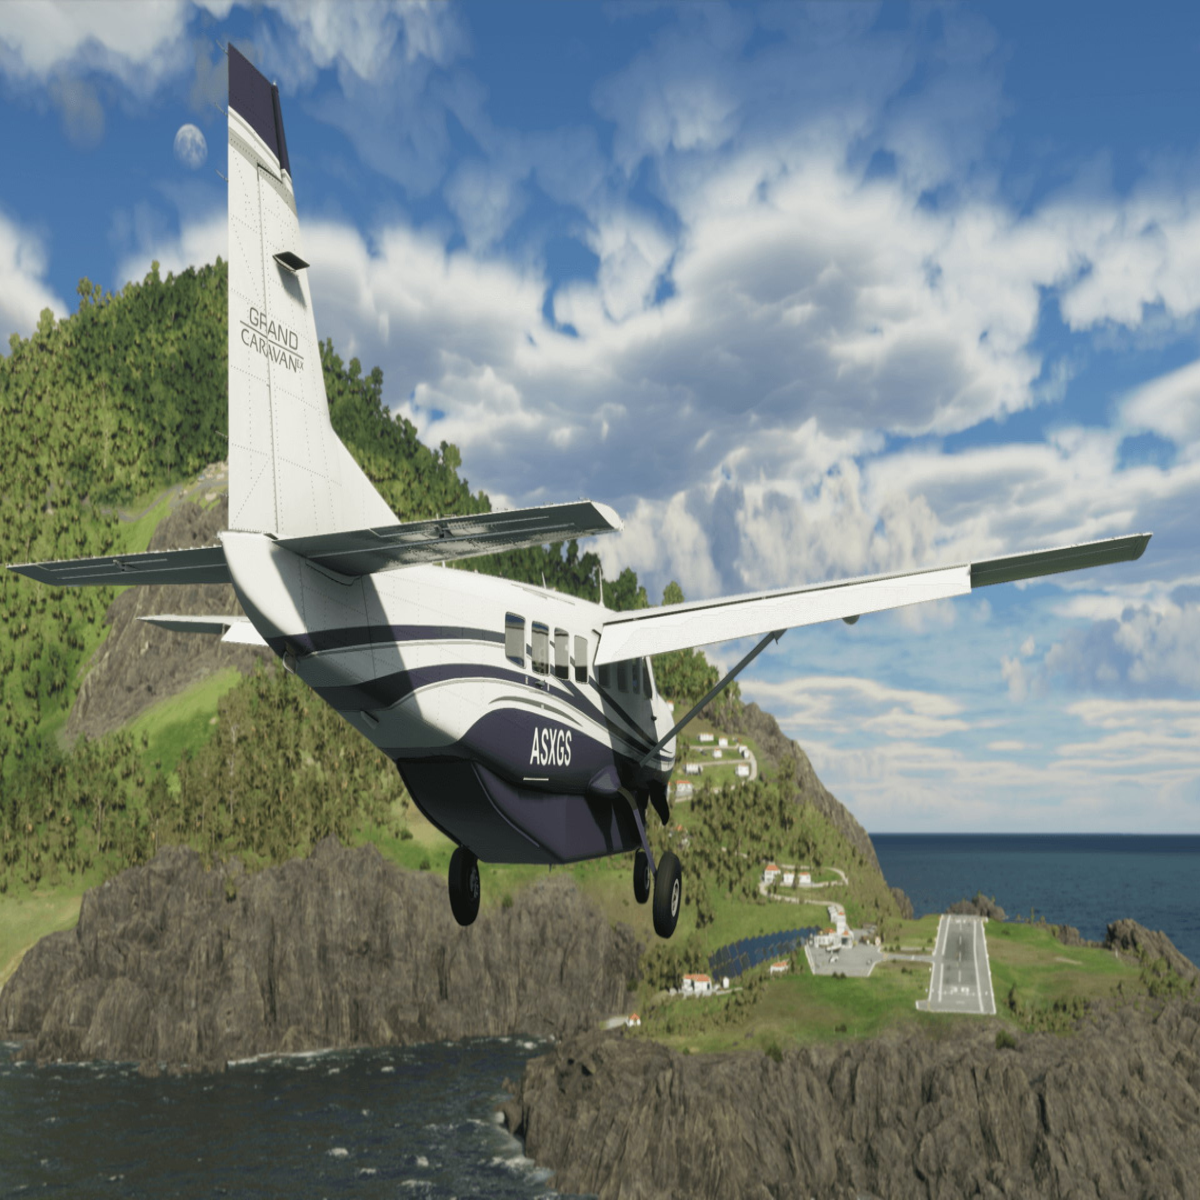 Is Google Earth Flight Simulator Realistic? (Really?) – Google